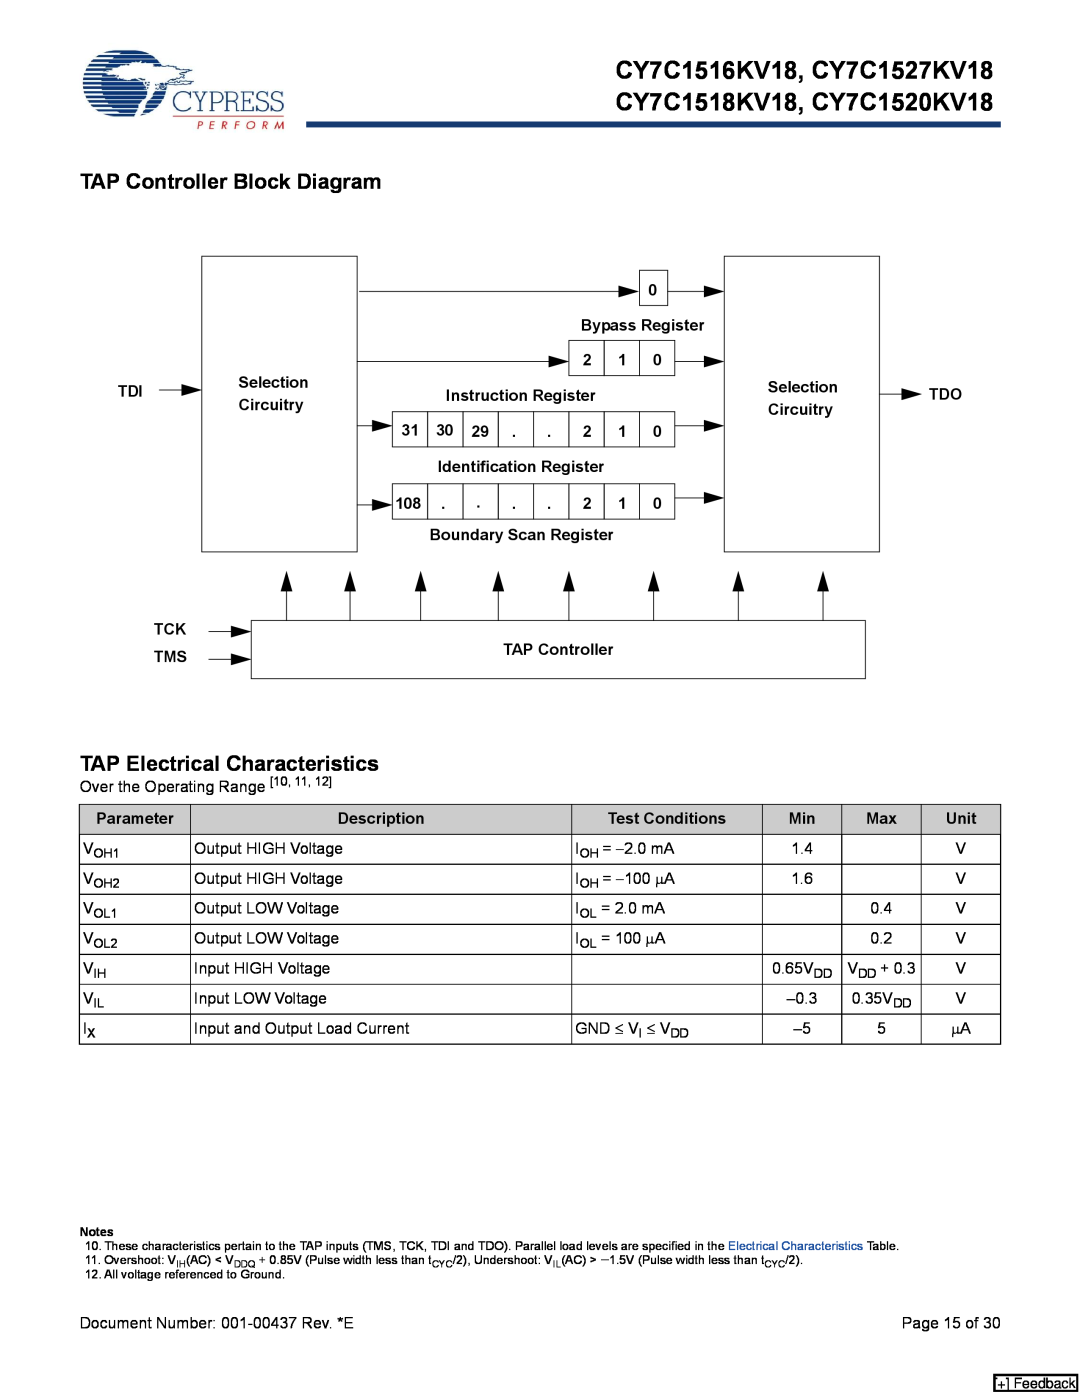 Cypress CY7C1518KV18, CY7C1520KV18, CY7C1516KV18, CY7C1527KV18 TAP Controller Block Diagram, TAP Electrical Characteristics 